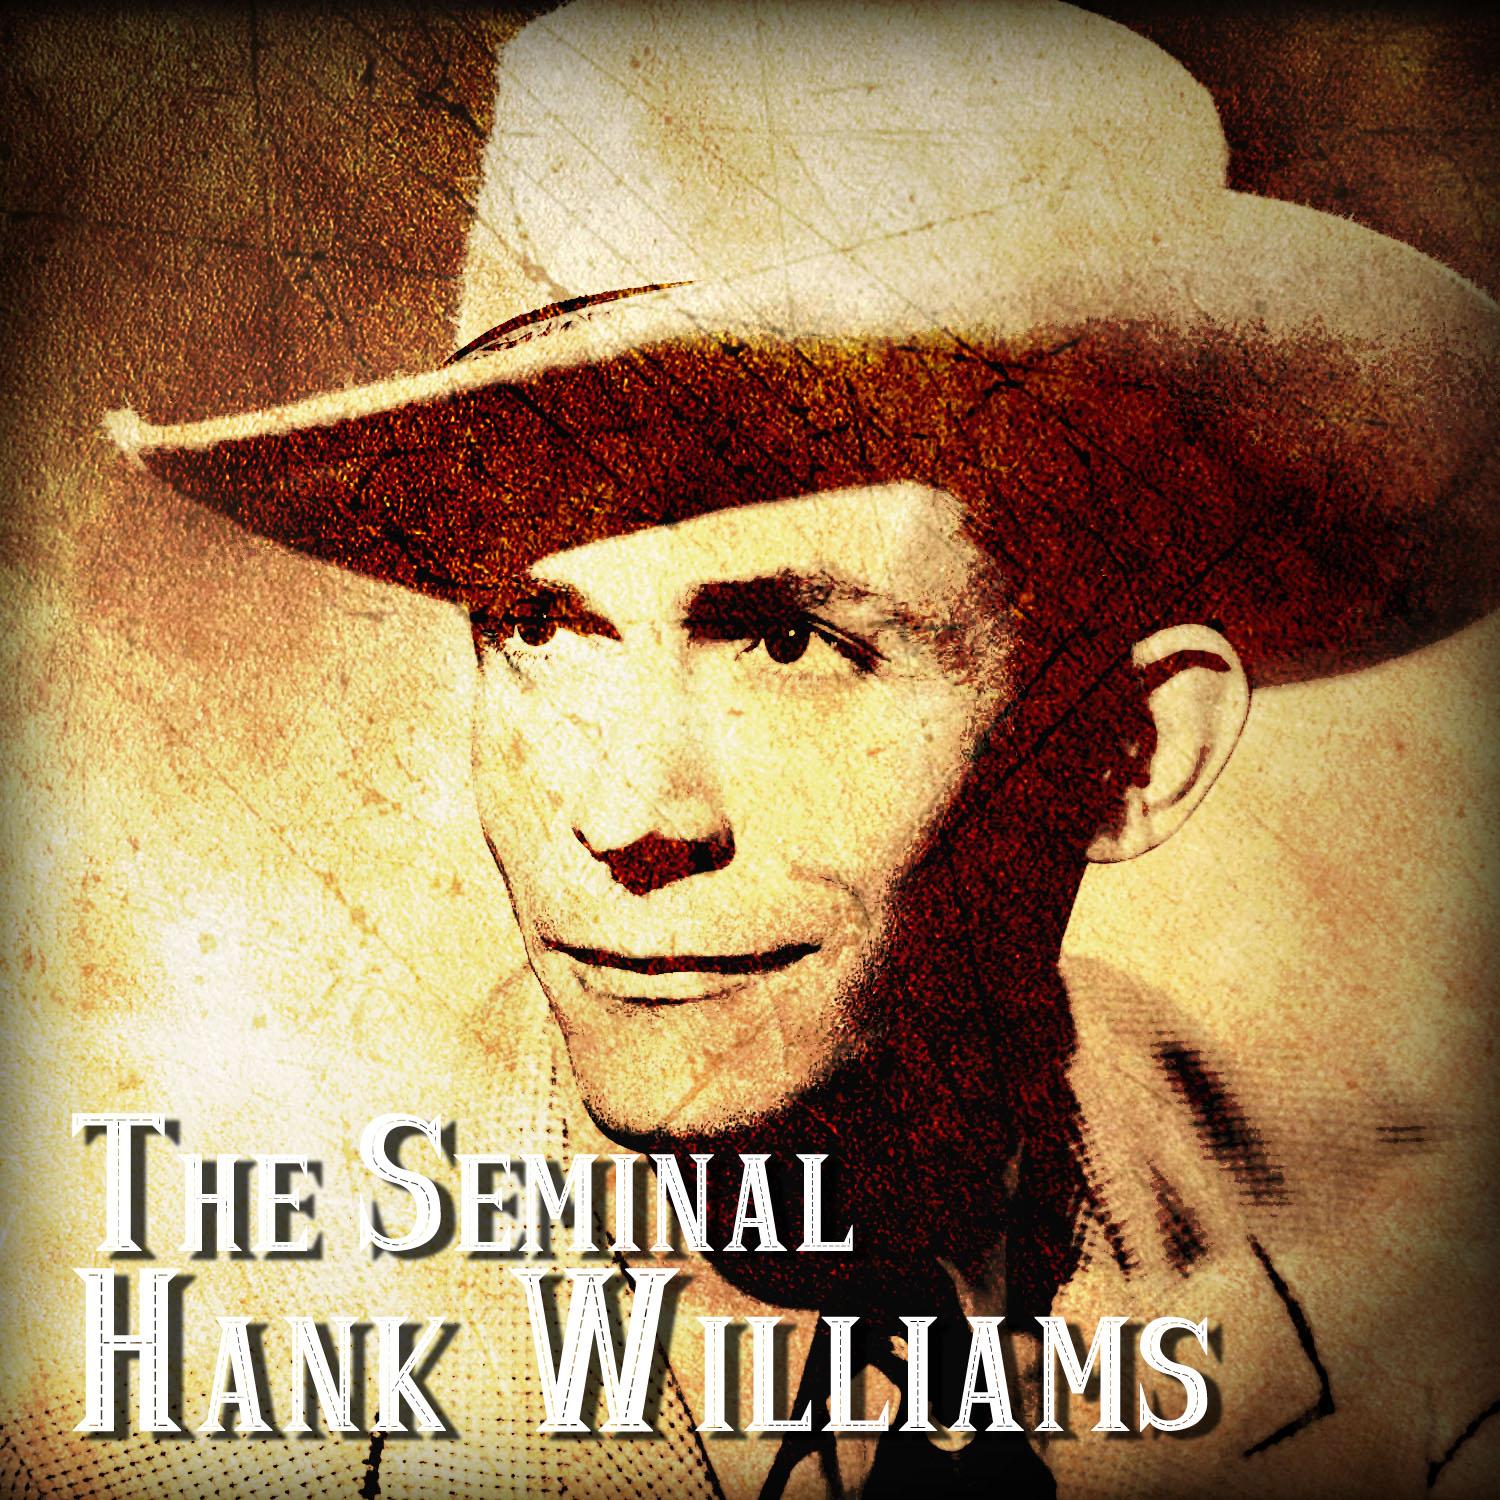 The Seminal Hank Williams